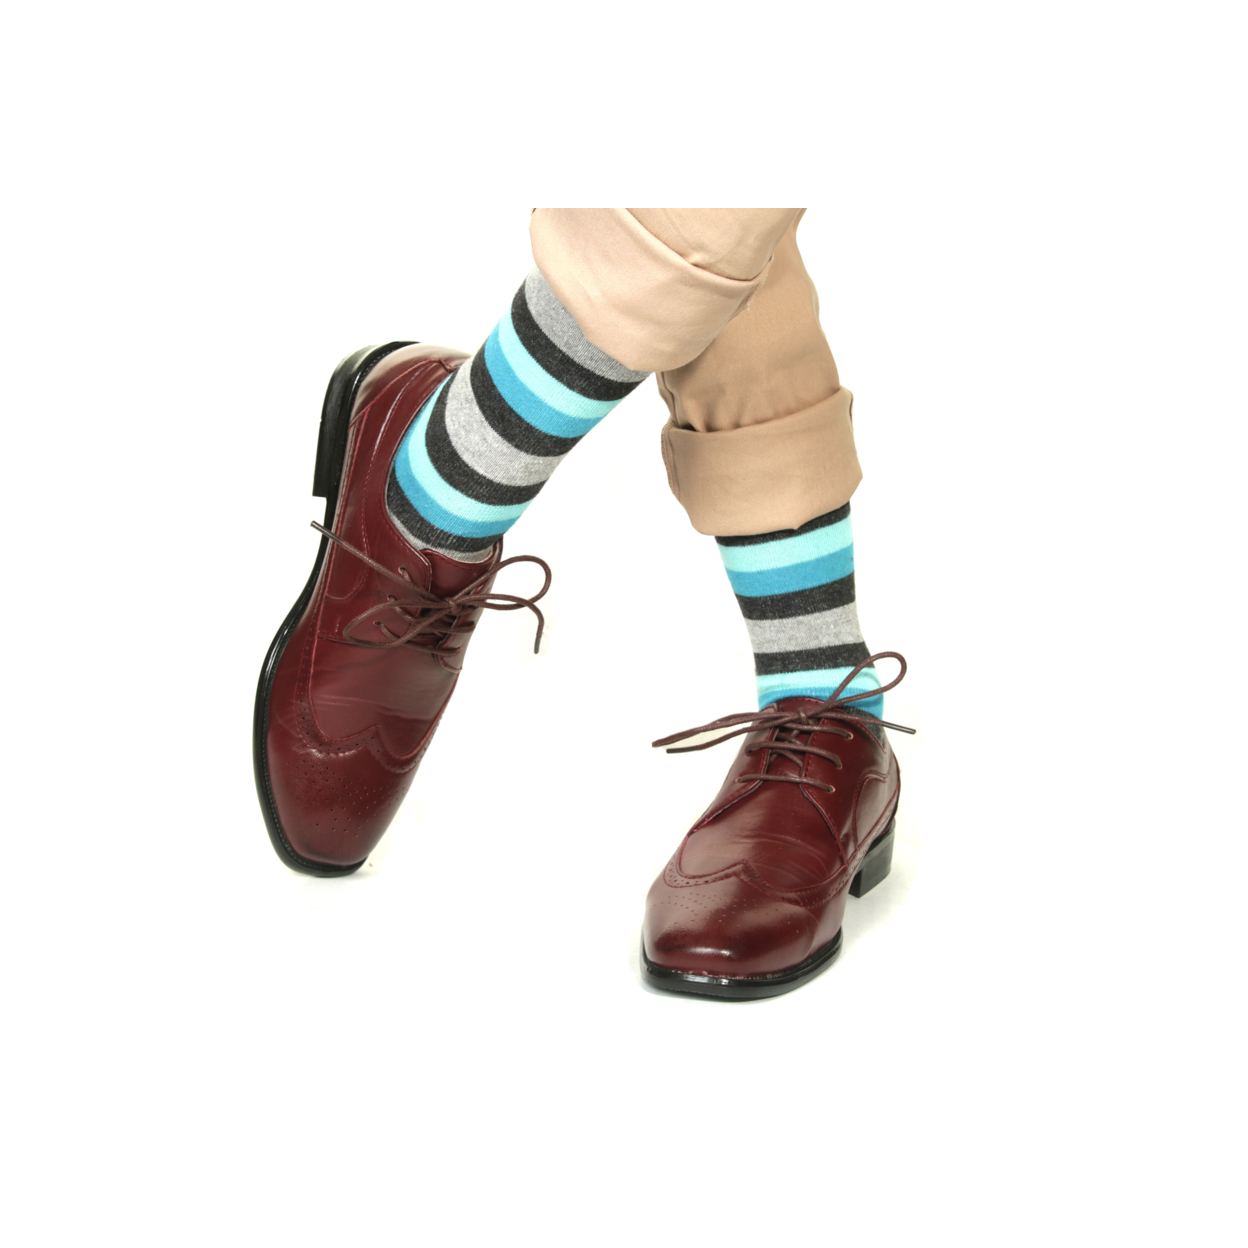 12-Pair Mystery Deal: Men's Stylish Dress Socks